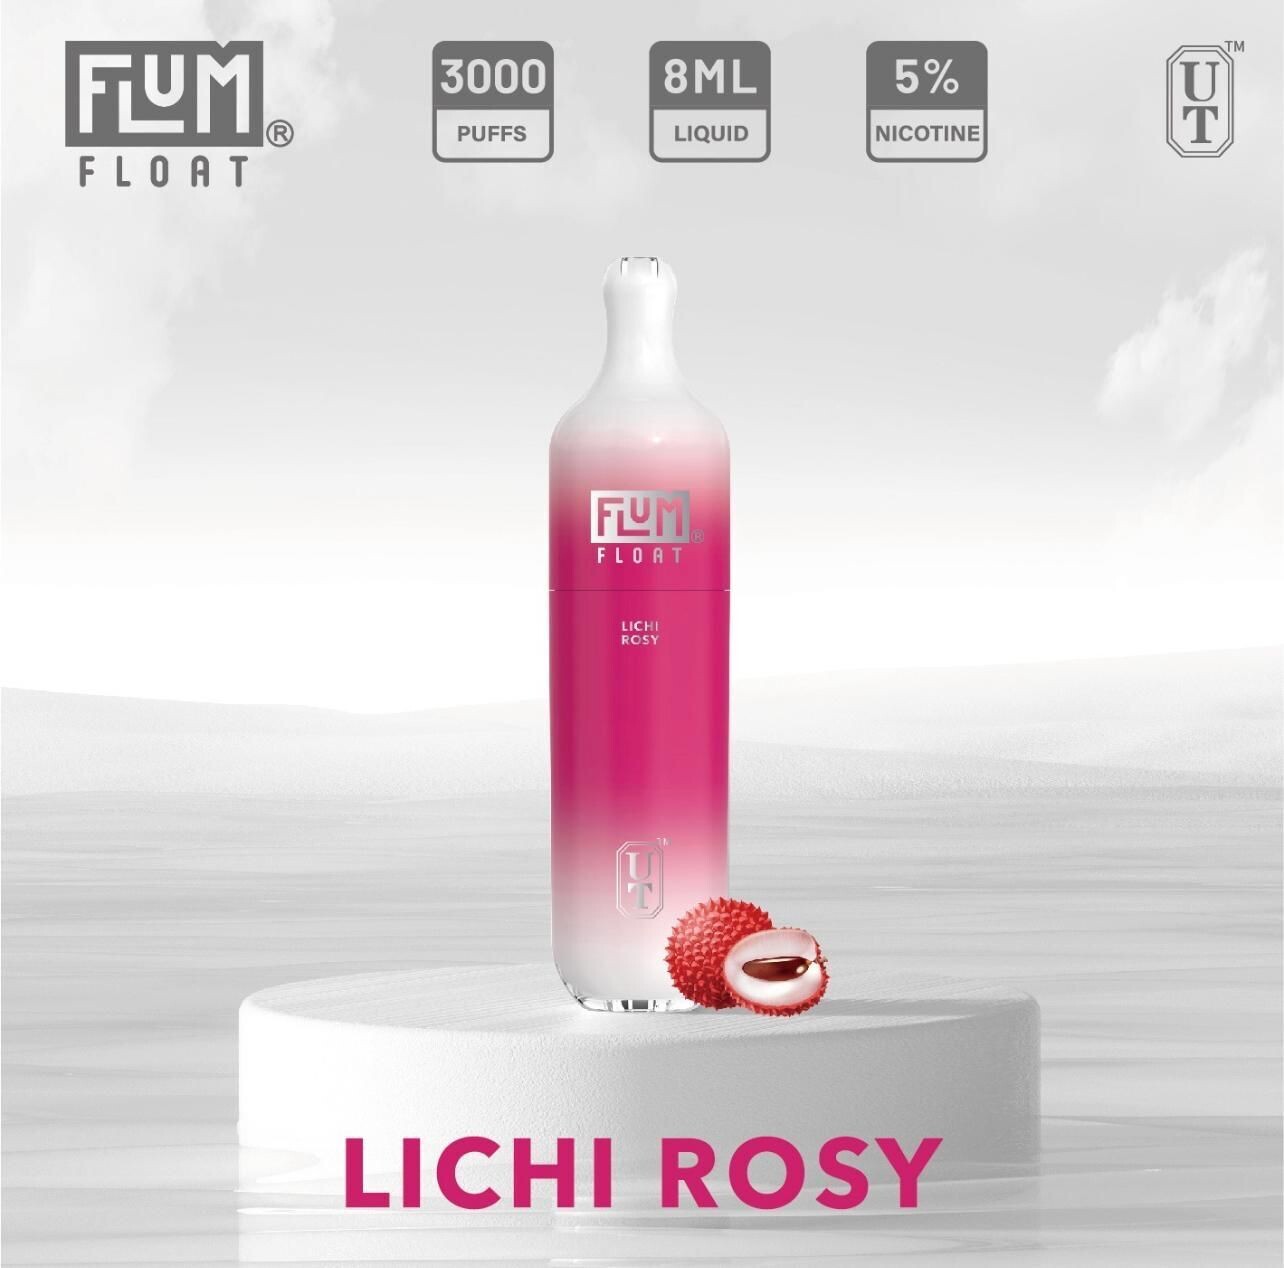 Flum 5% Lichi Rosy